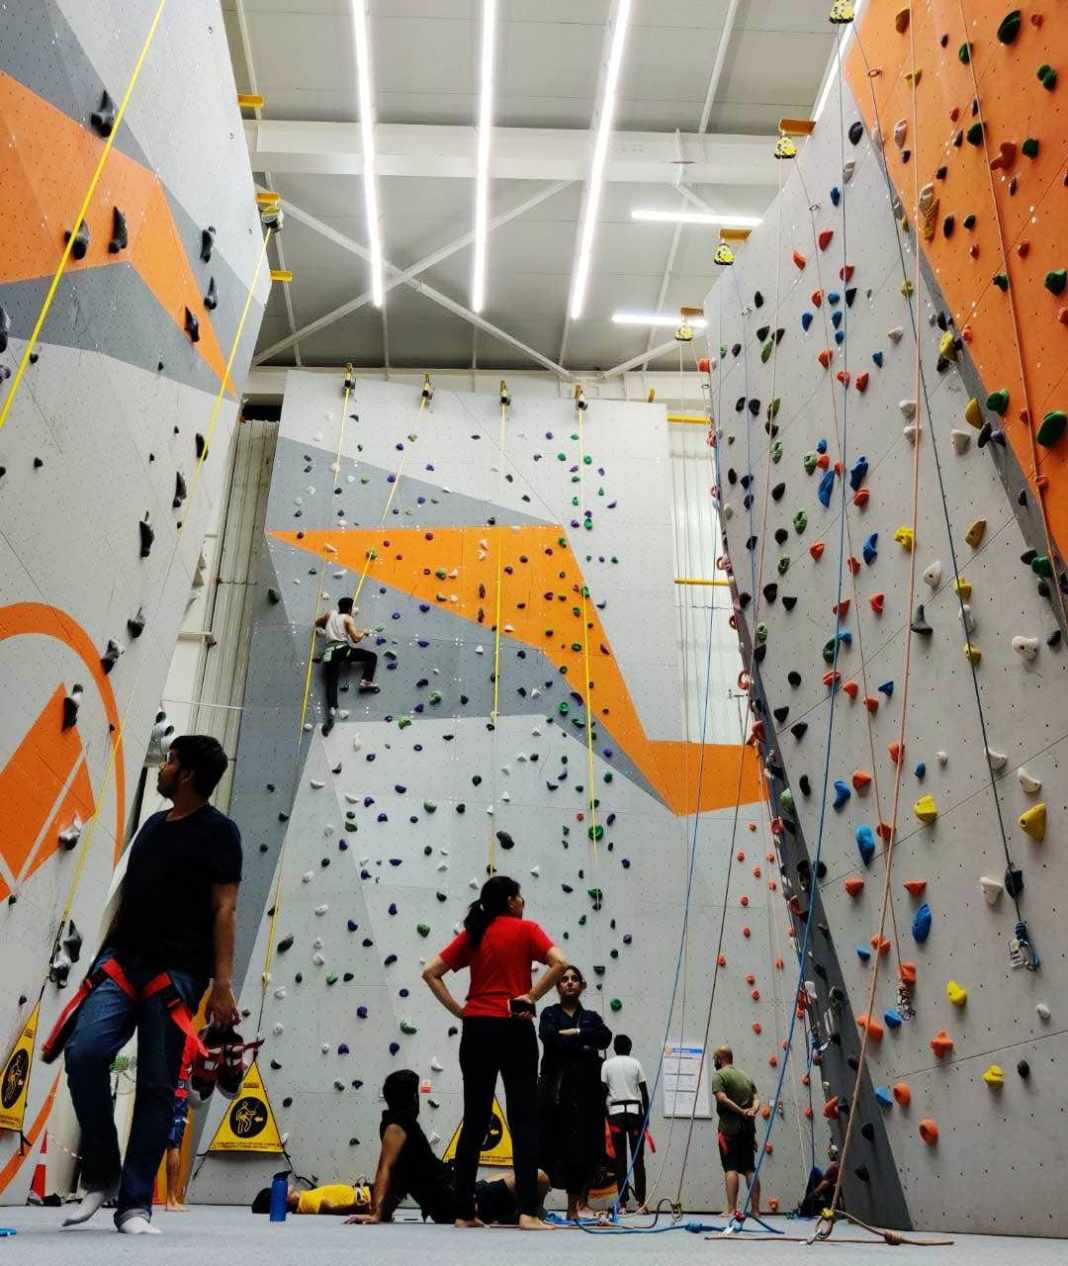 Climbing gym near me - Do you love rock climbing?